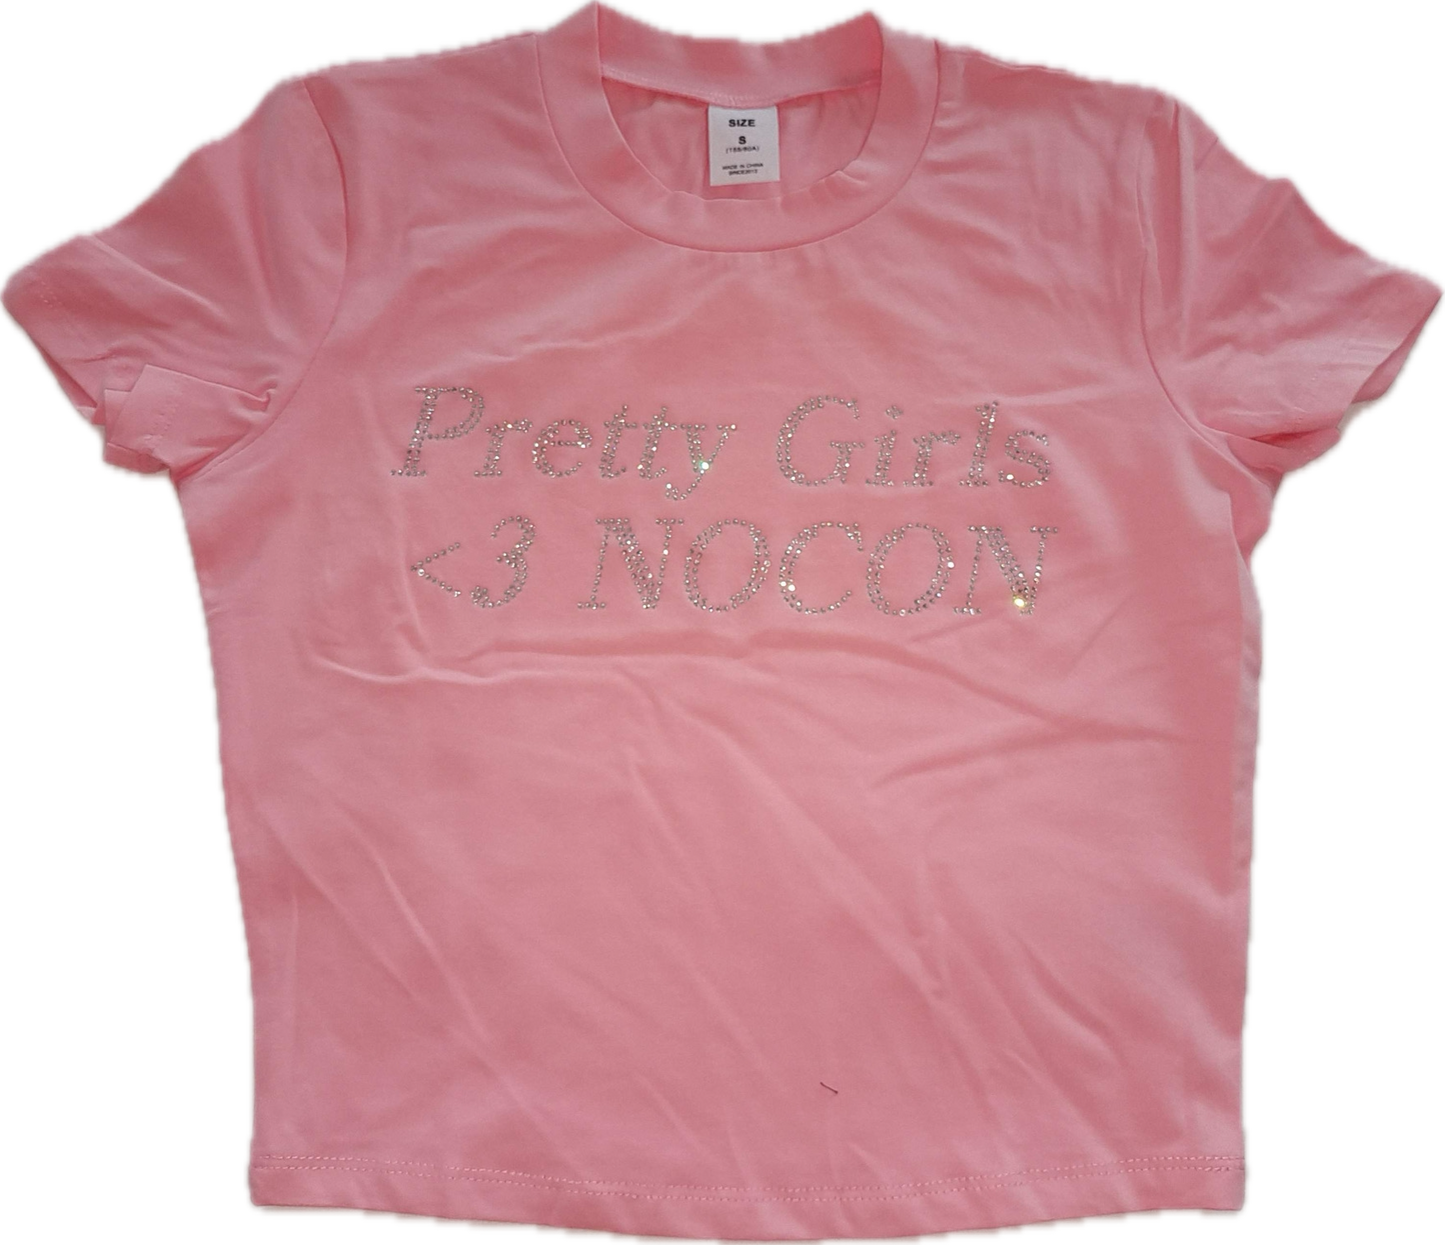 Pretty Girls <3 NOCON Crop top (Pink)